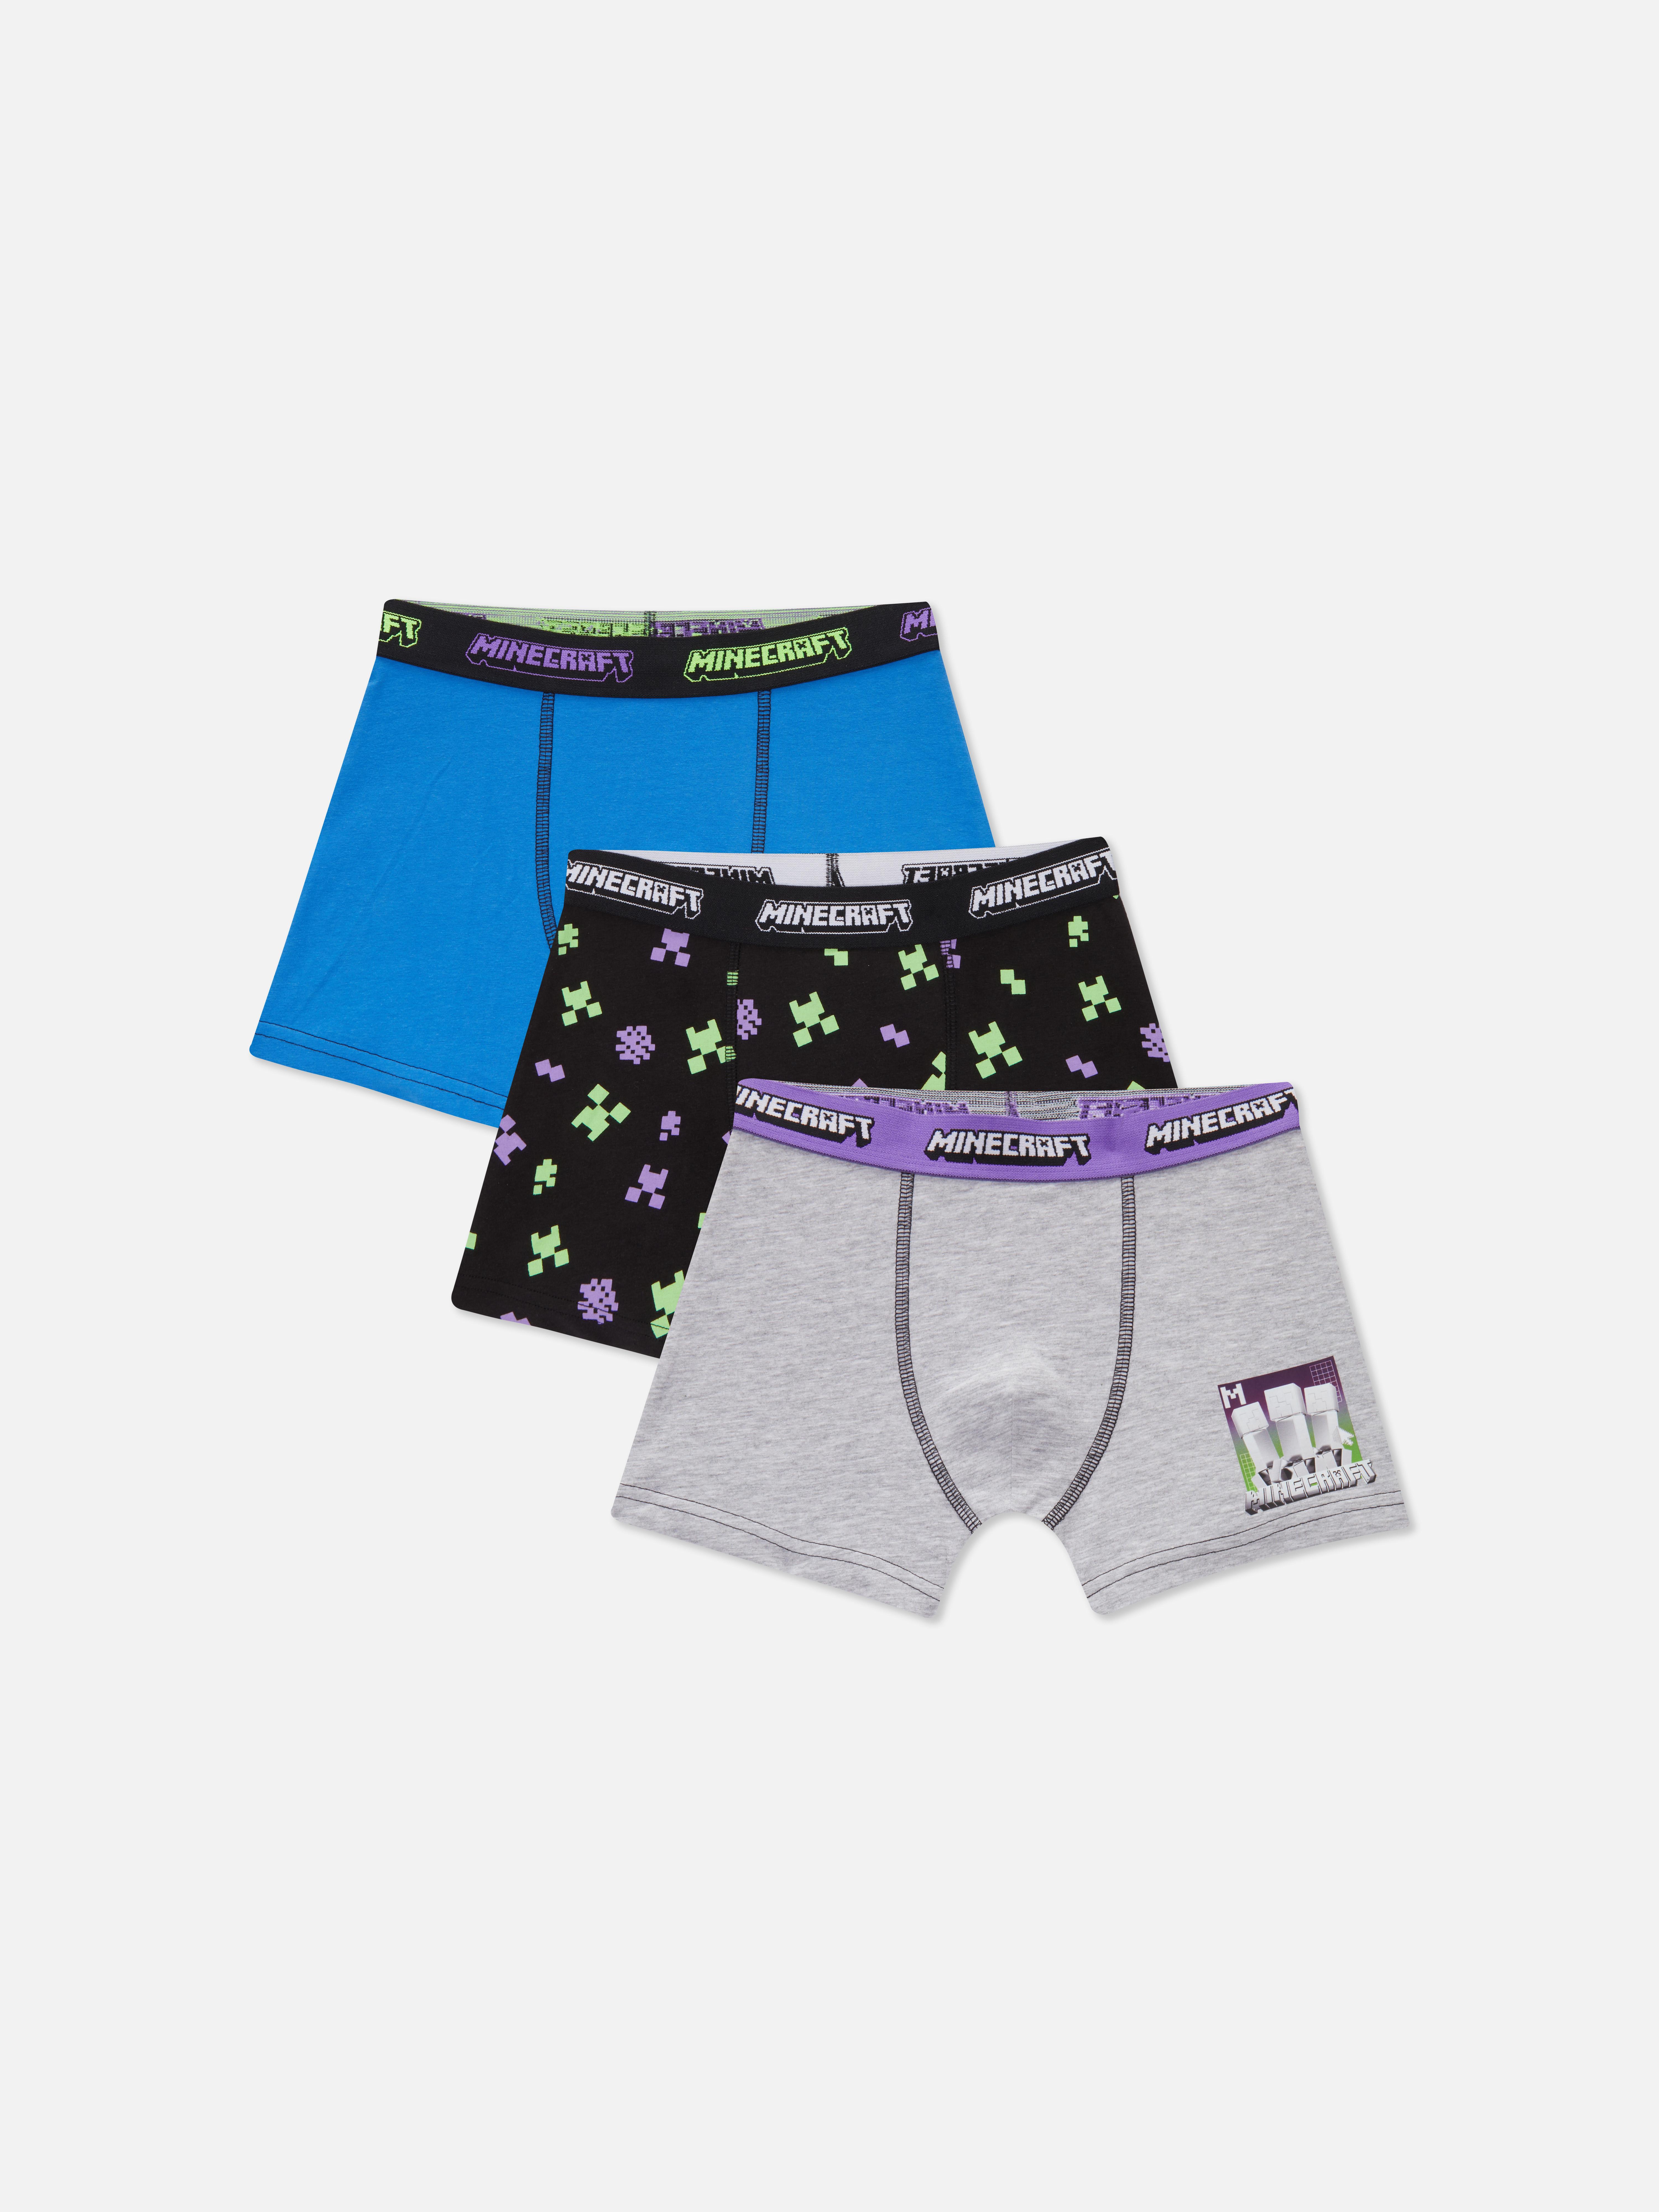 MINECRAFT Underwear for kids – outlet online – shop at Booztlet